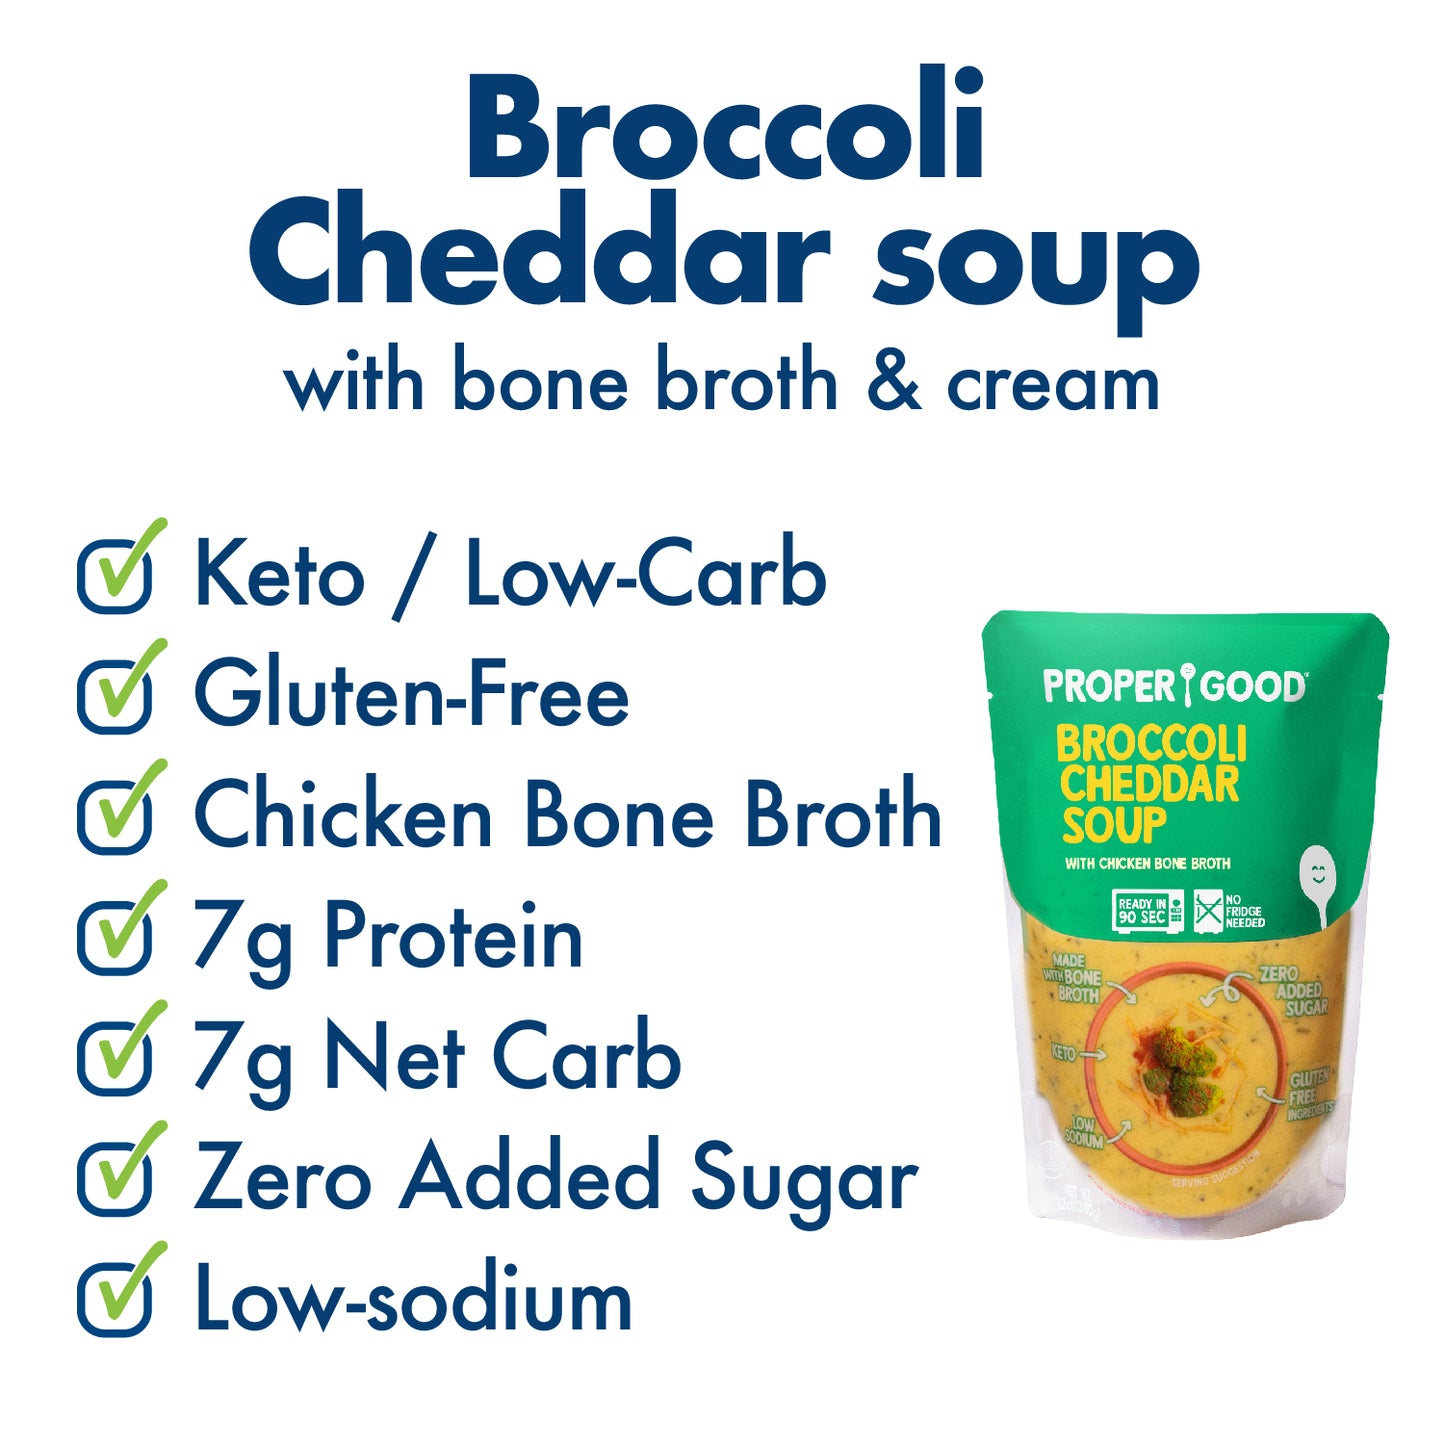 Broccoli Cheddar Soup Benefits - Eat Proper Good